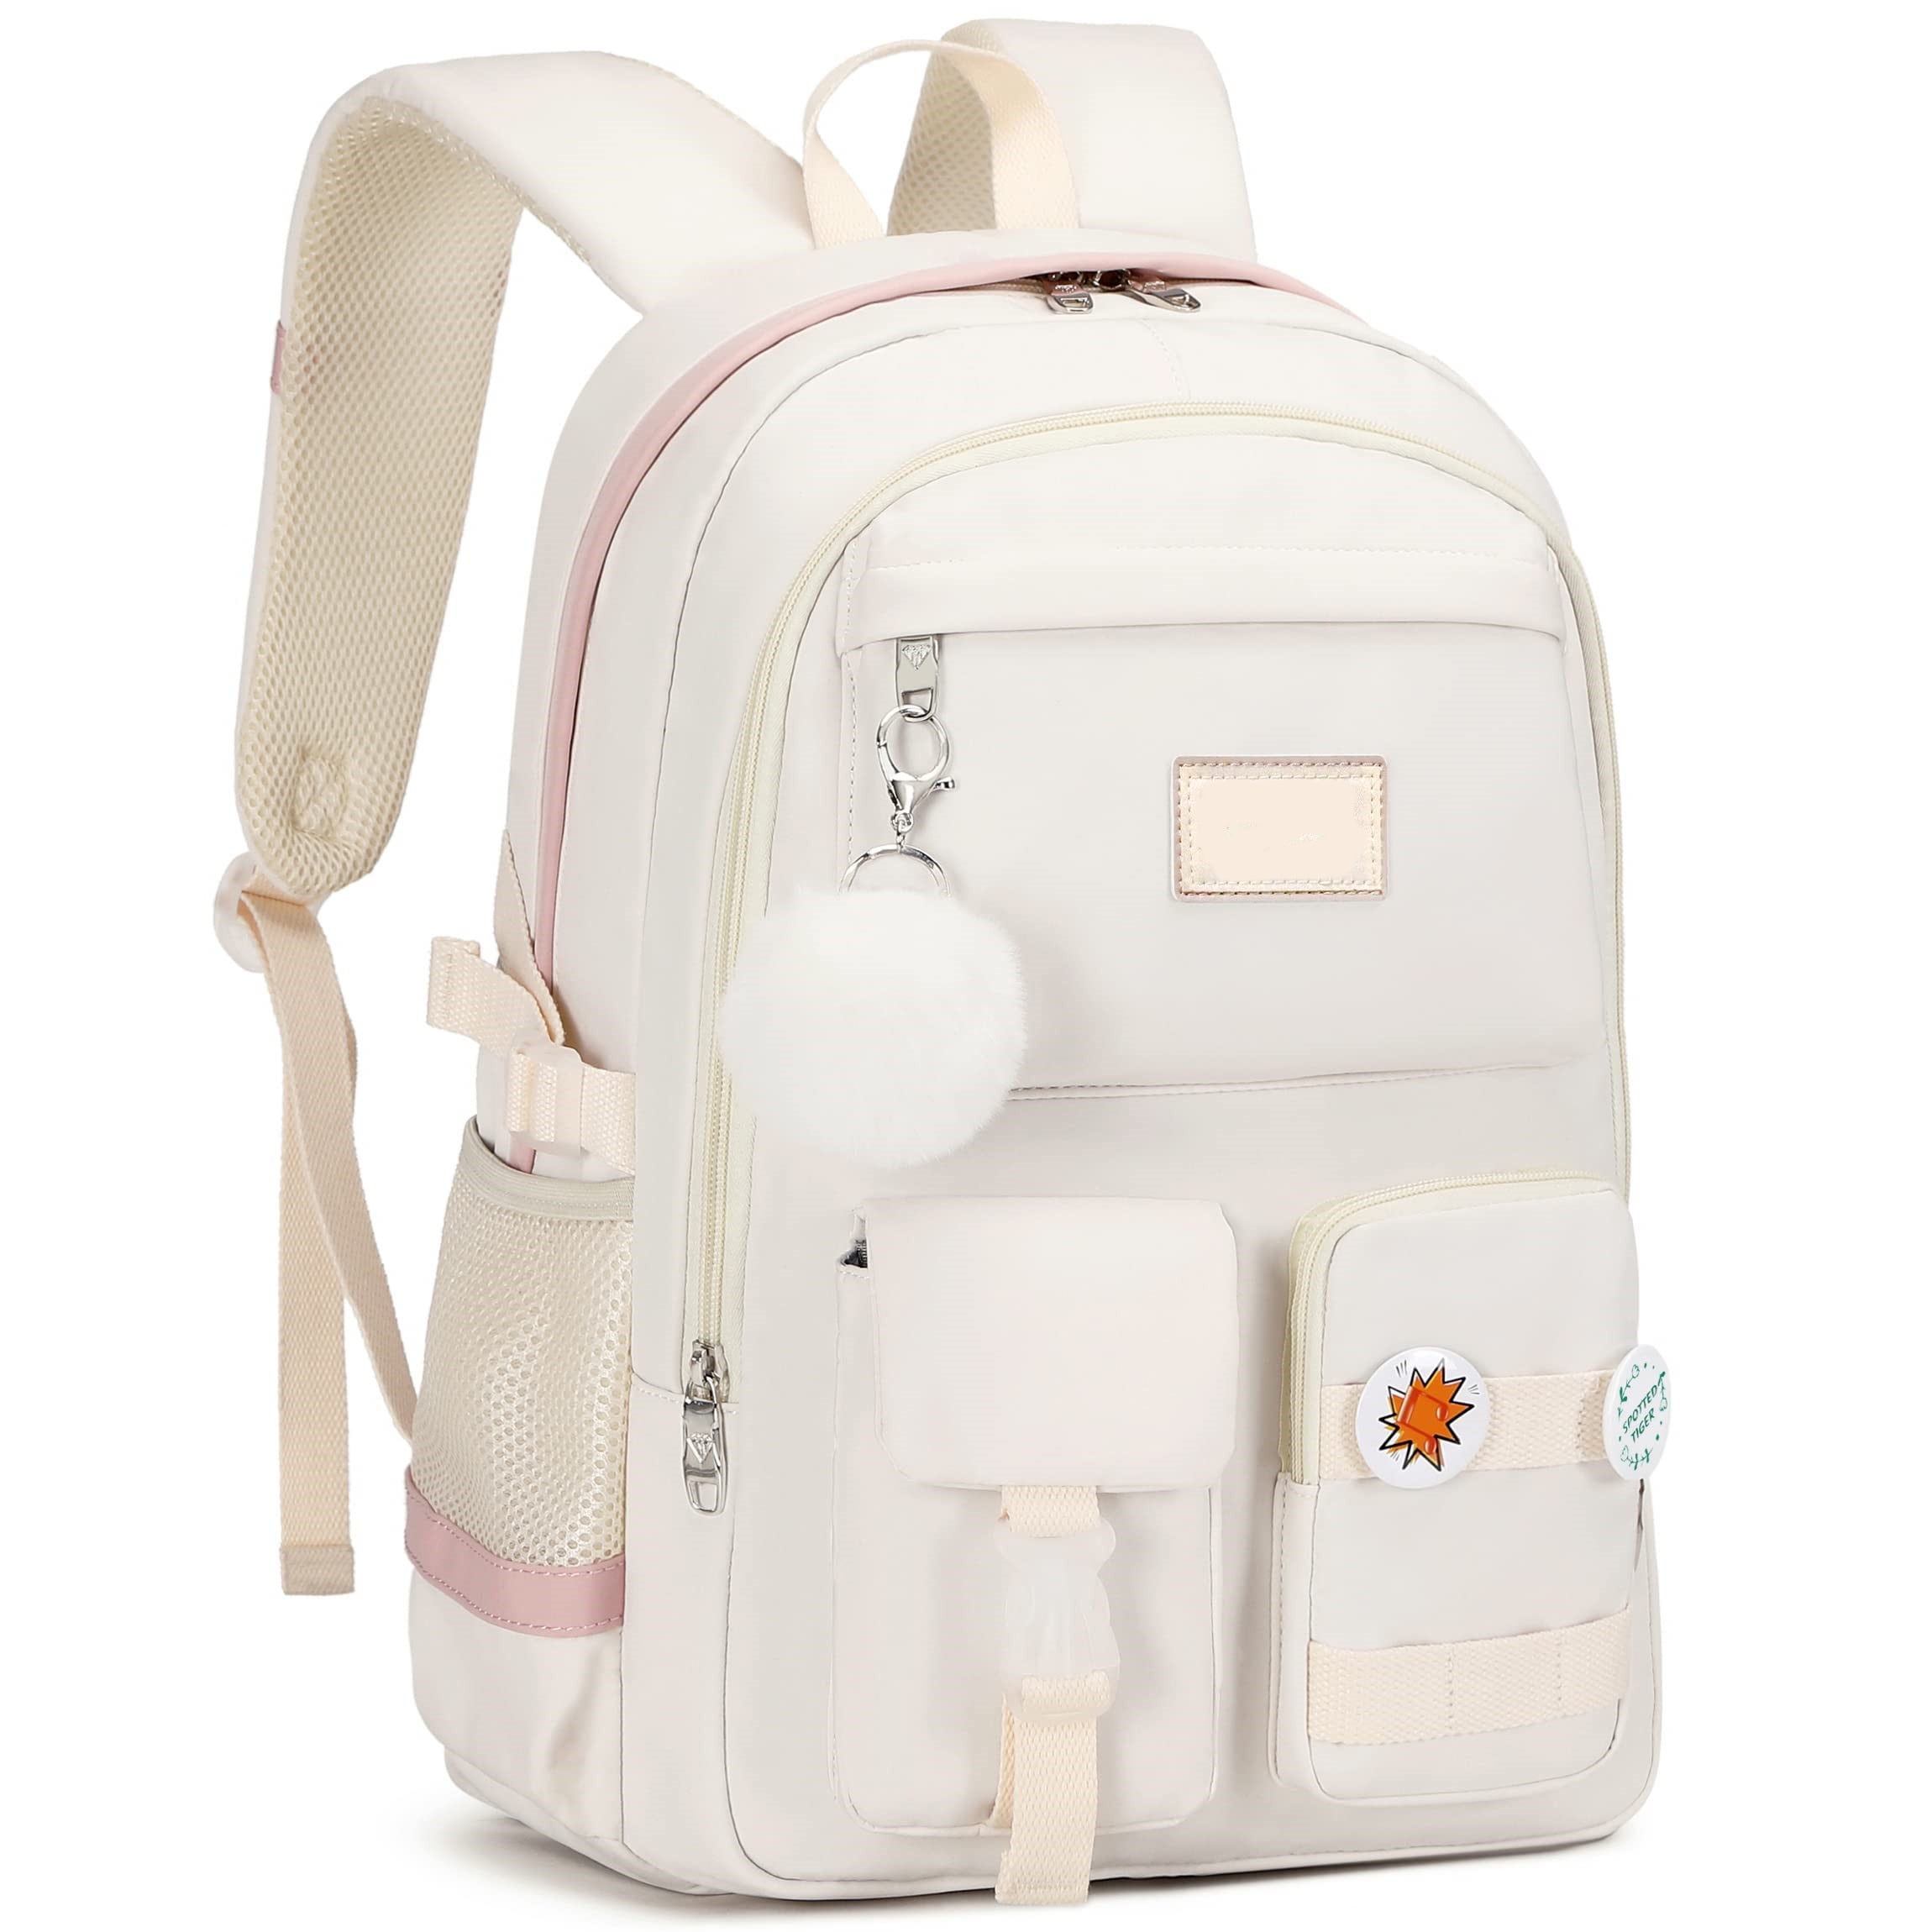 Buy Spotted Tiger School Backpack for Girls Bookbag School Bag ...